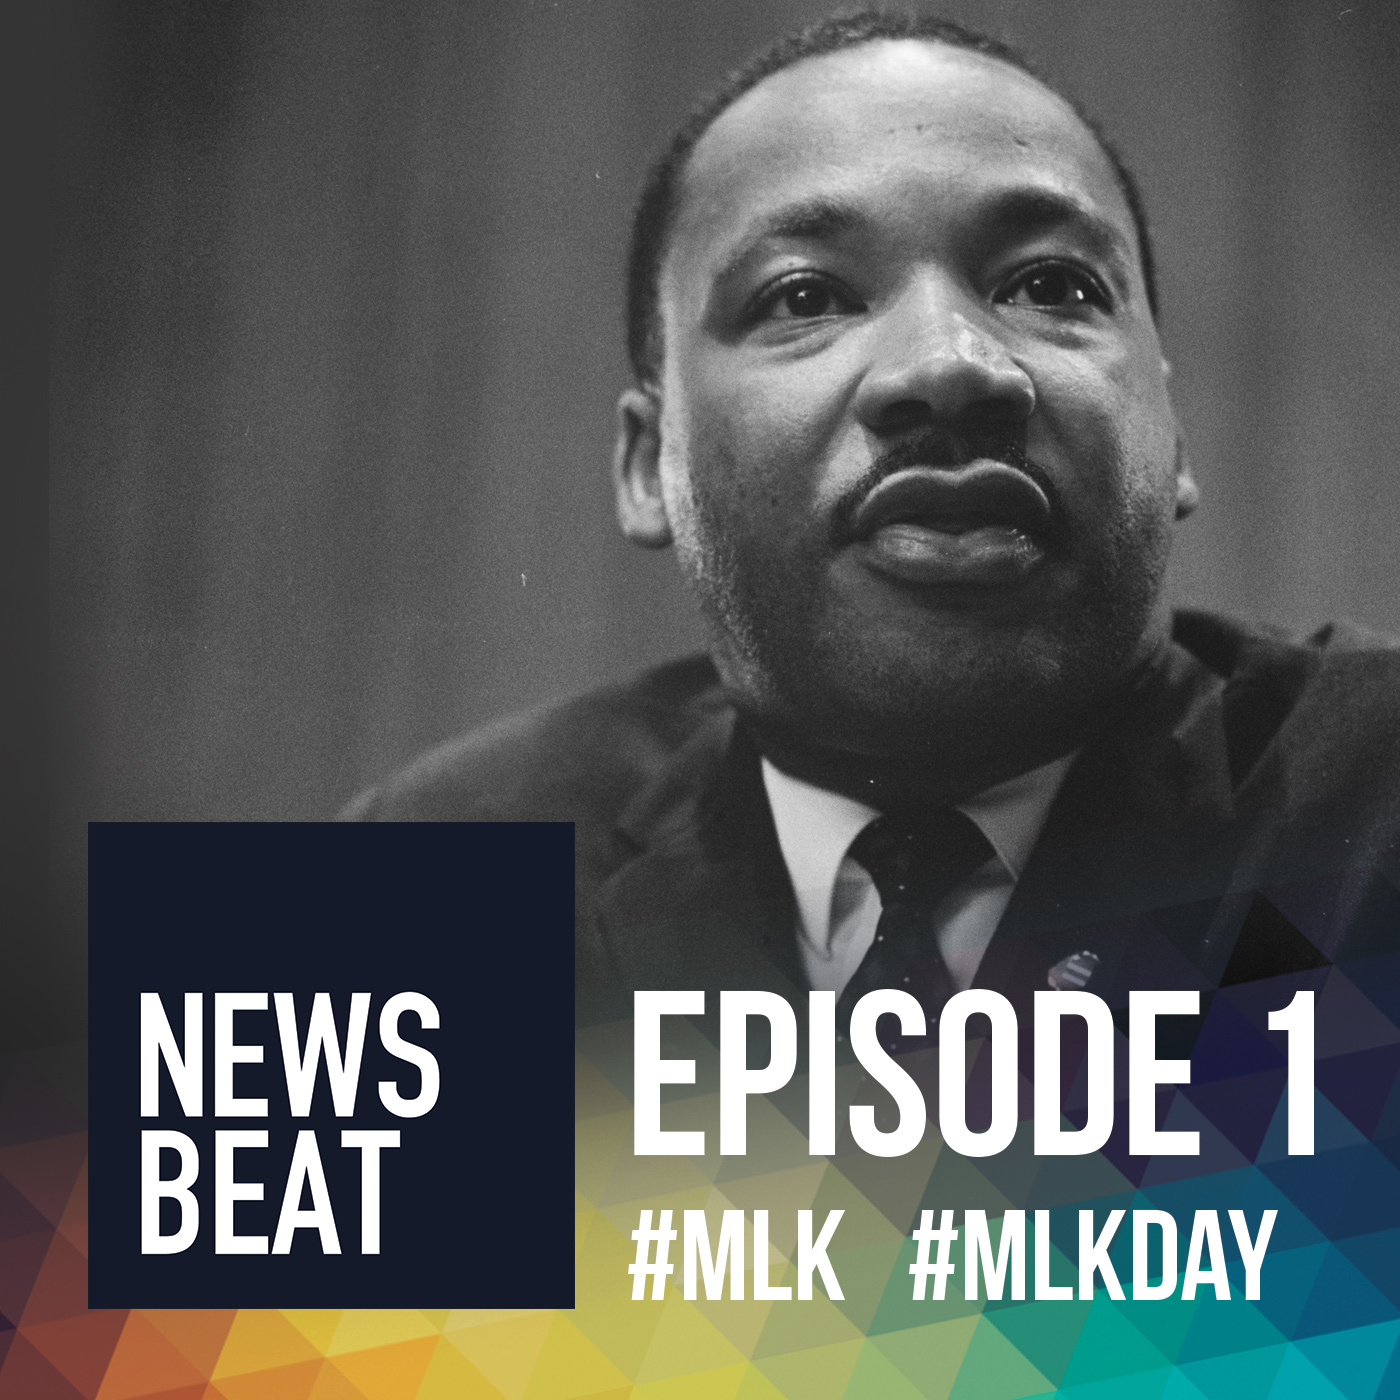 News Beat: MLK, Jr. - Unfinished Business